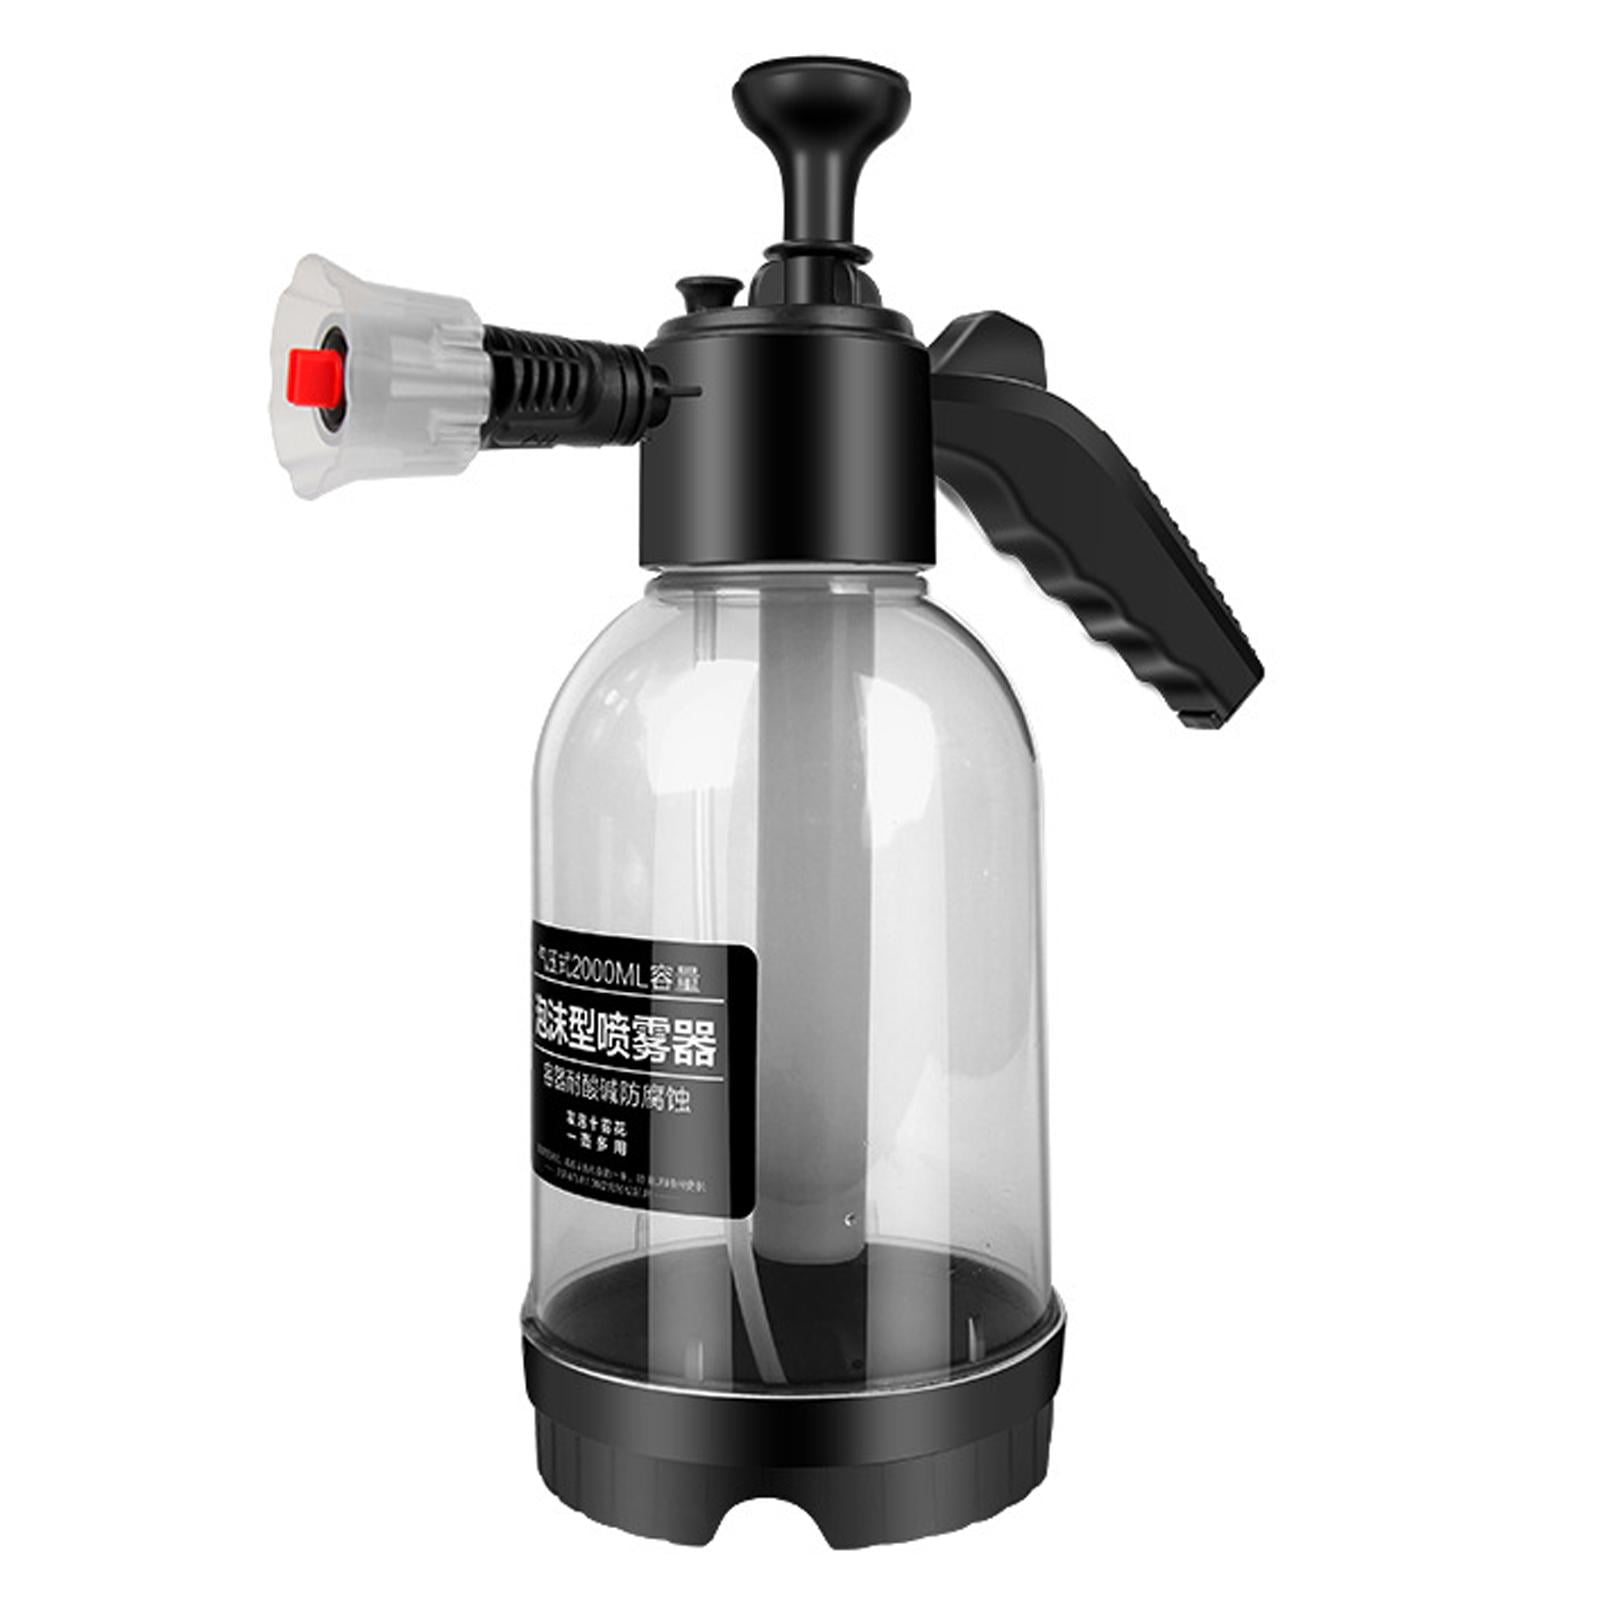 Tranor 2L Pump Foam Sprayer, 0.5 Gallon Car Wash Sprayer, Foaming Pump  Sprayer, Hand Pressurized Soap Sprayer with Two Nozzle Options for Home